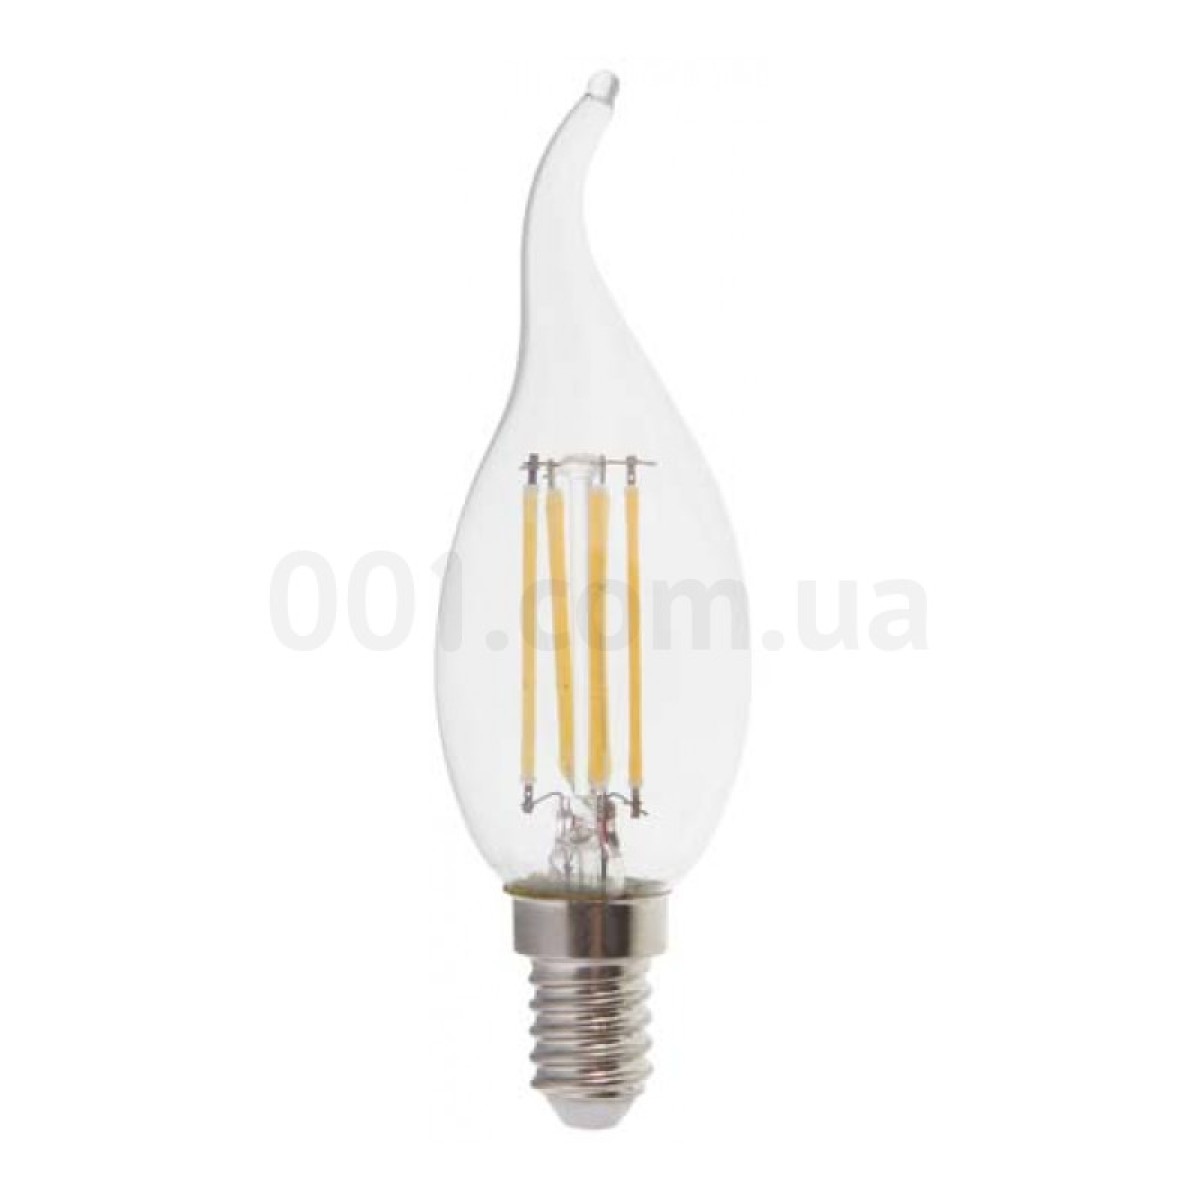 Светодиодная лампа LB-59 CF37 (свеча на ветру) филамент 4Вт 4000K E14, Feron 256_256.jpg